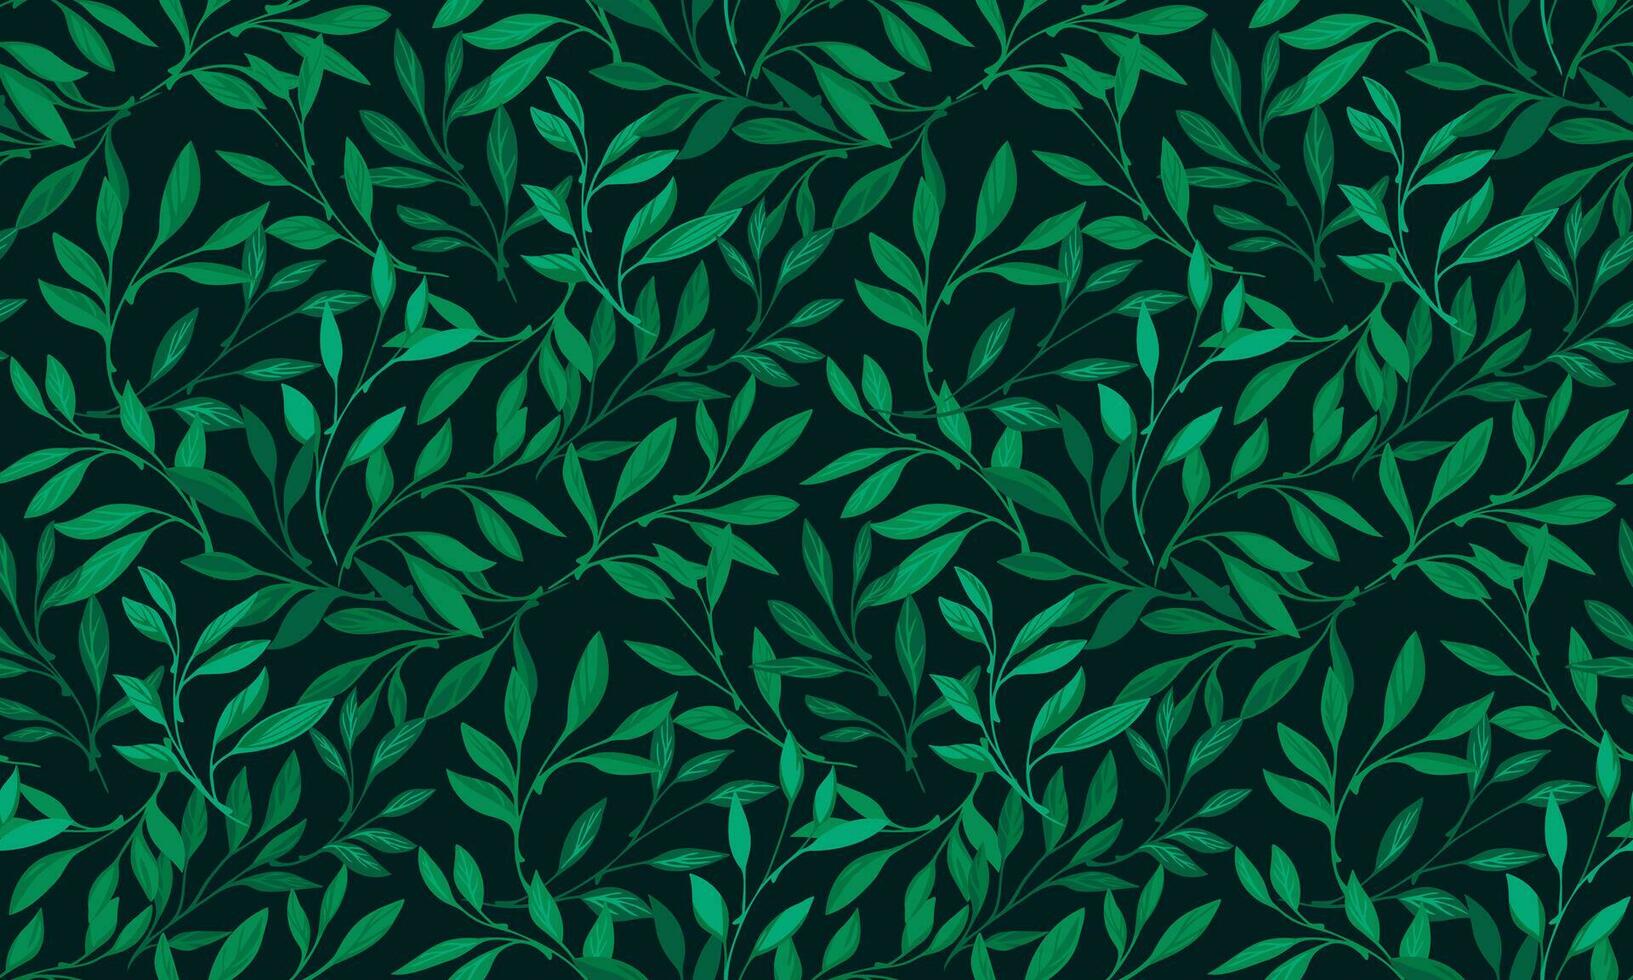 hermoso, florido, minúsculo hojas modelo. vector mano dibujado verde ramas hojas. resumen naturaleza hoja modelo. modelo para textil, moda, imprimir, superficie diseño, papel, cubrir, tela